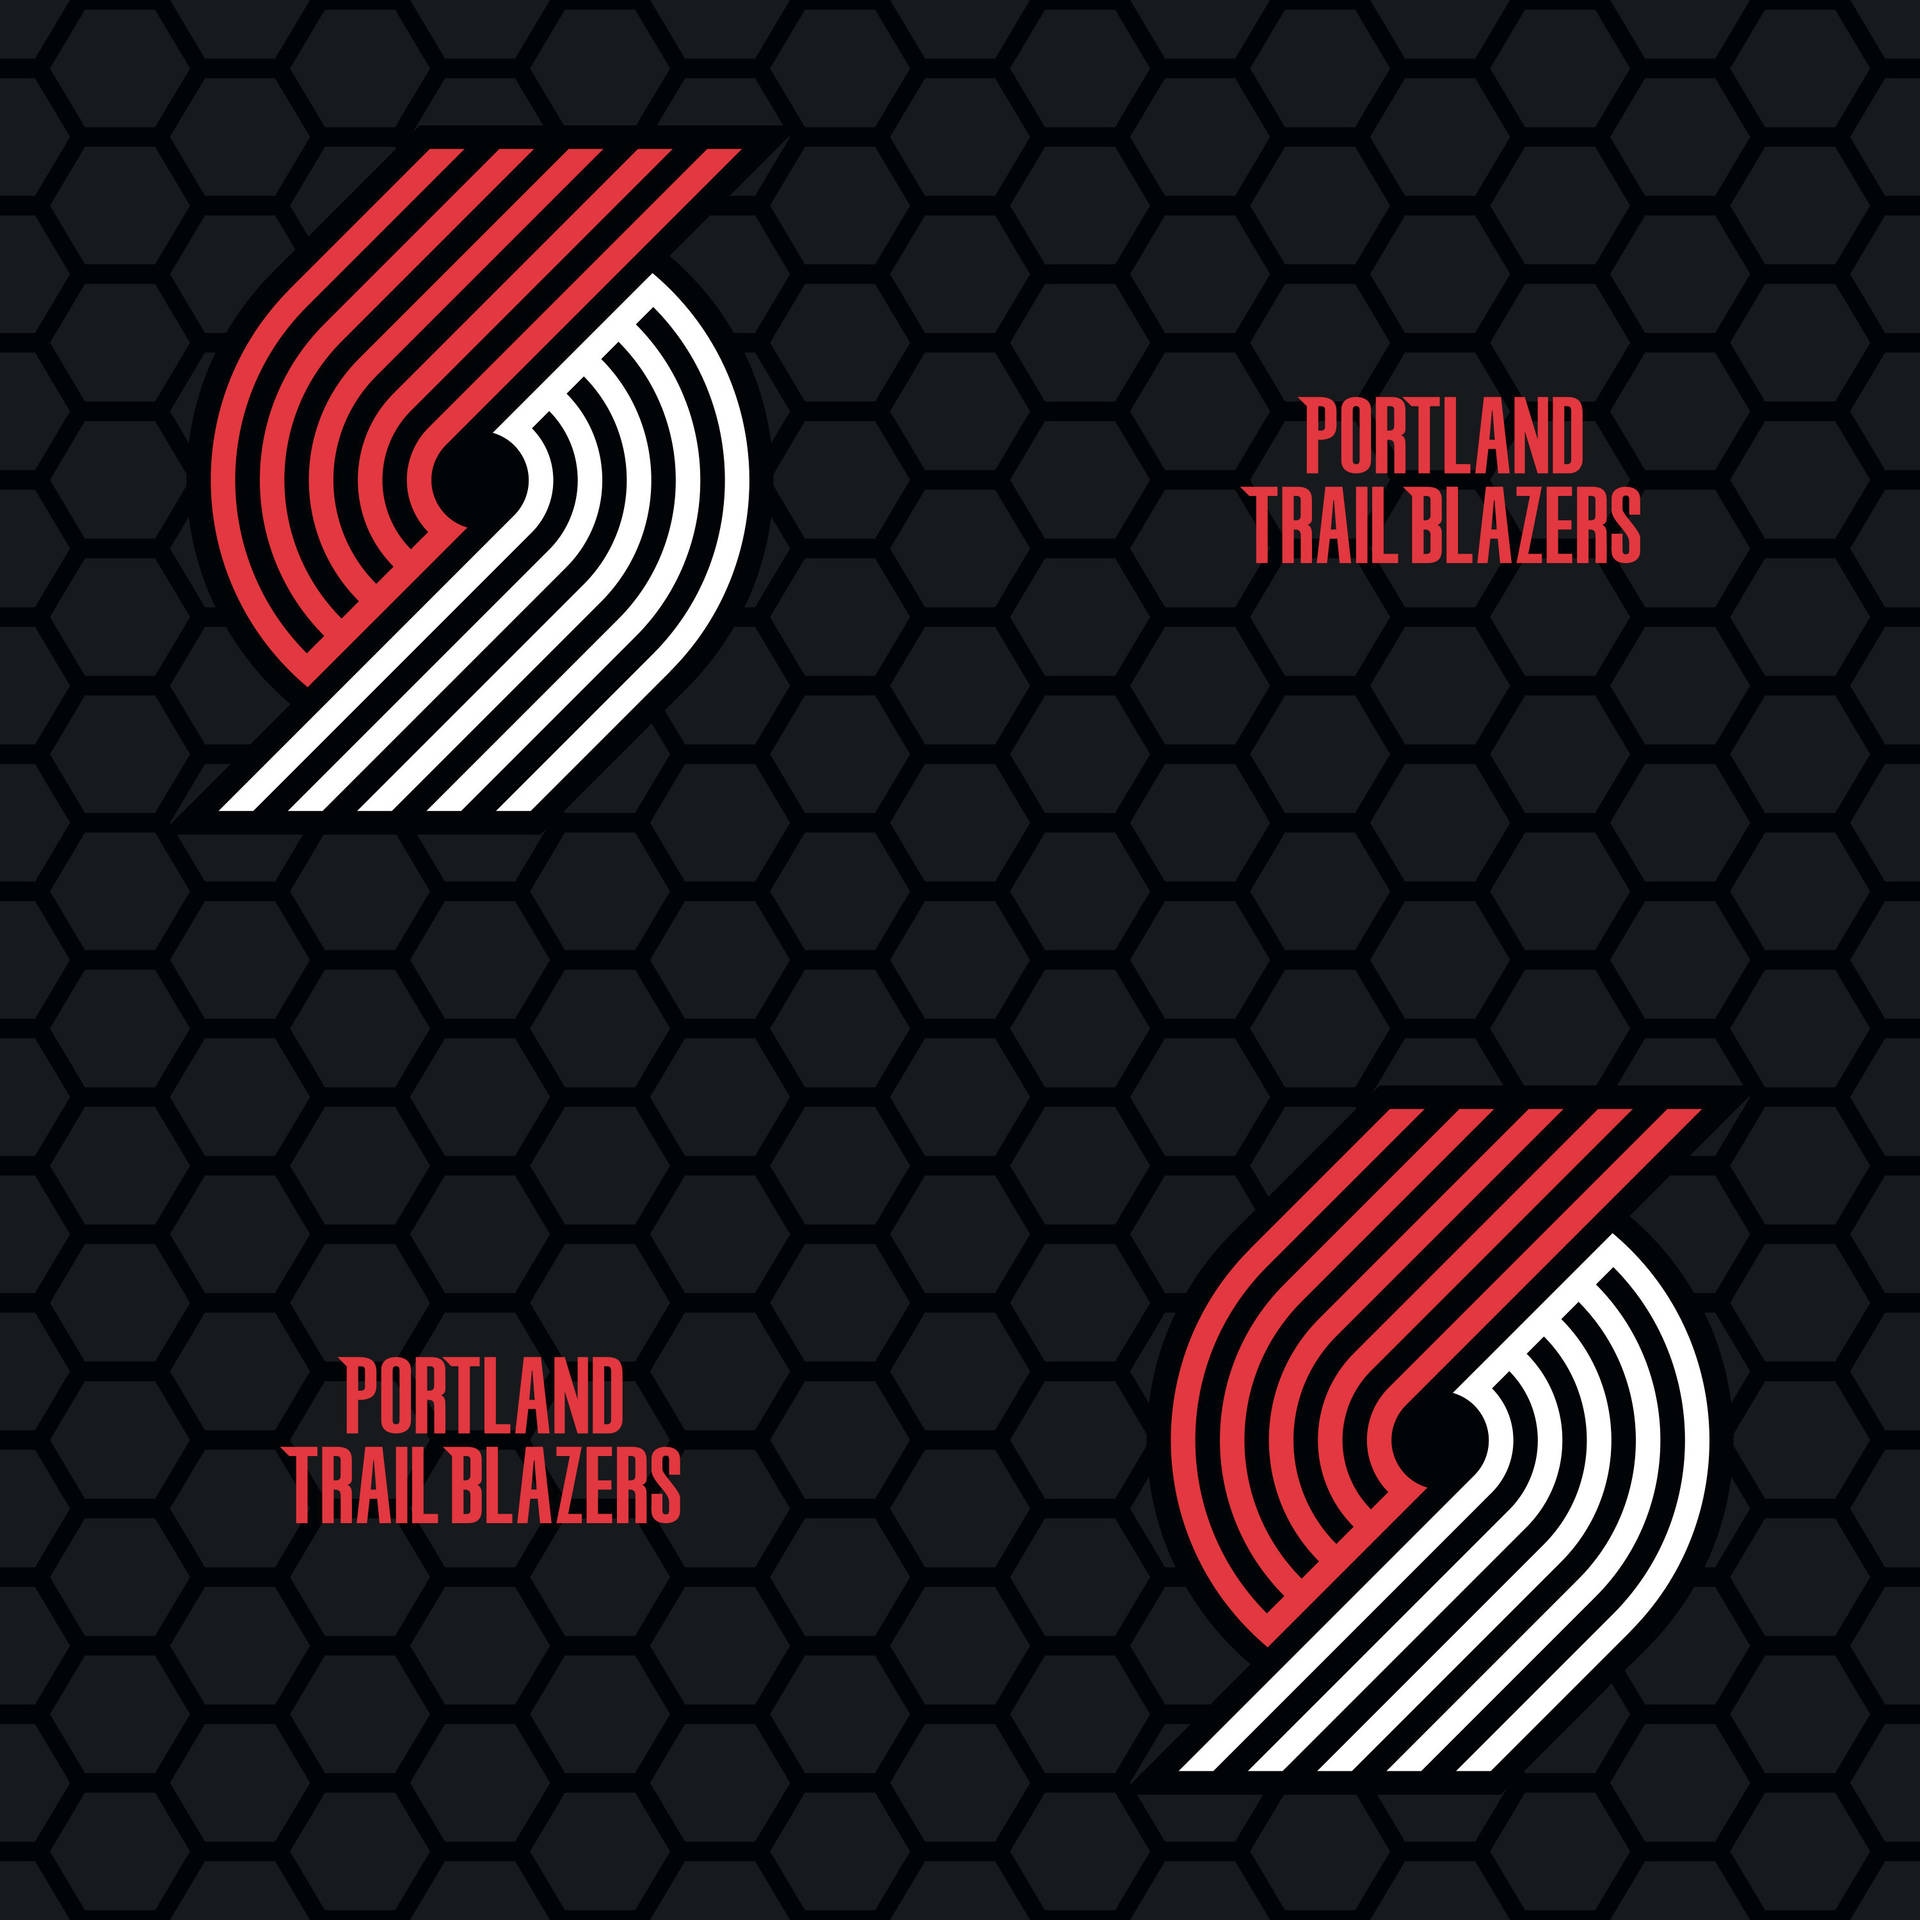 Portland Trail Blazers Hexagon Poster Background